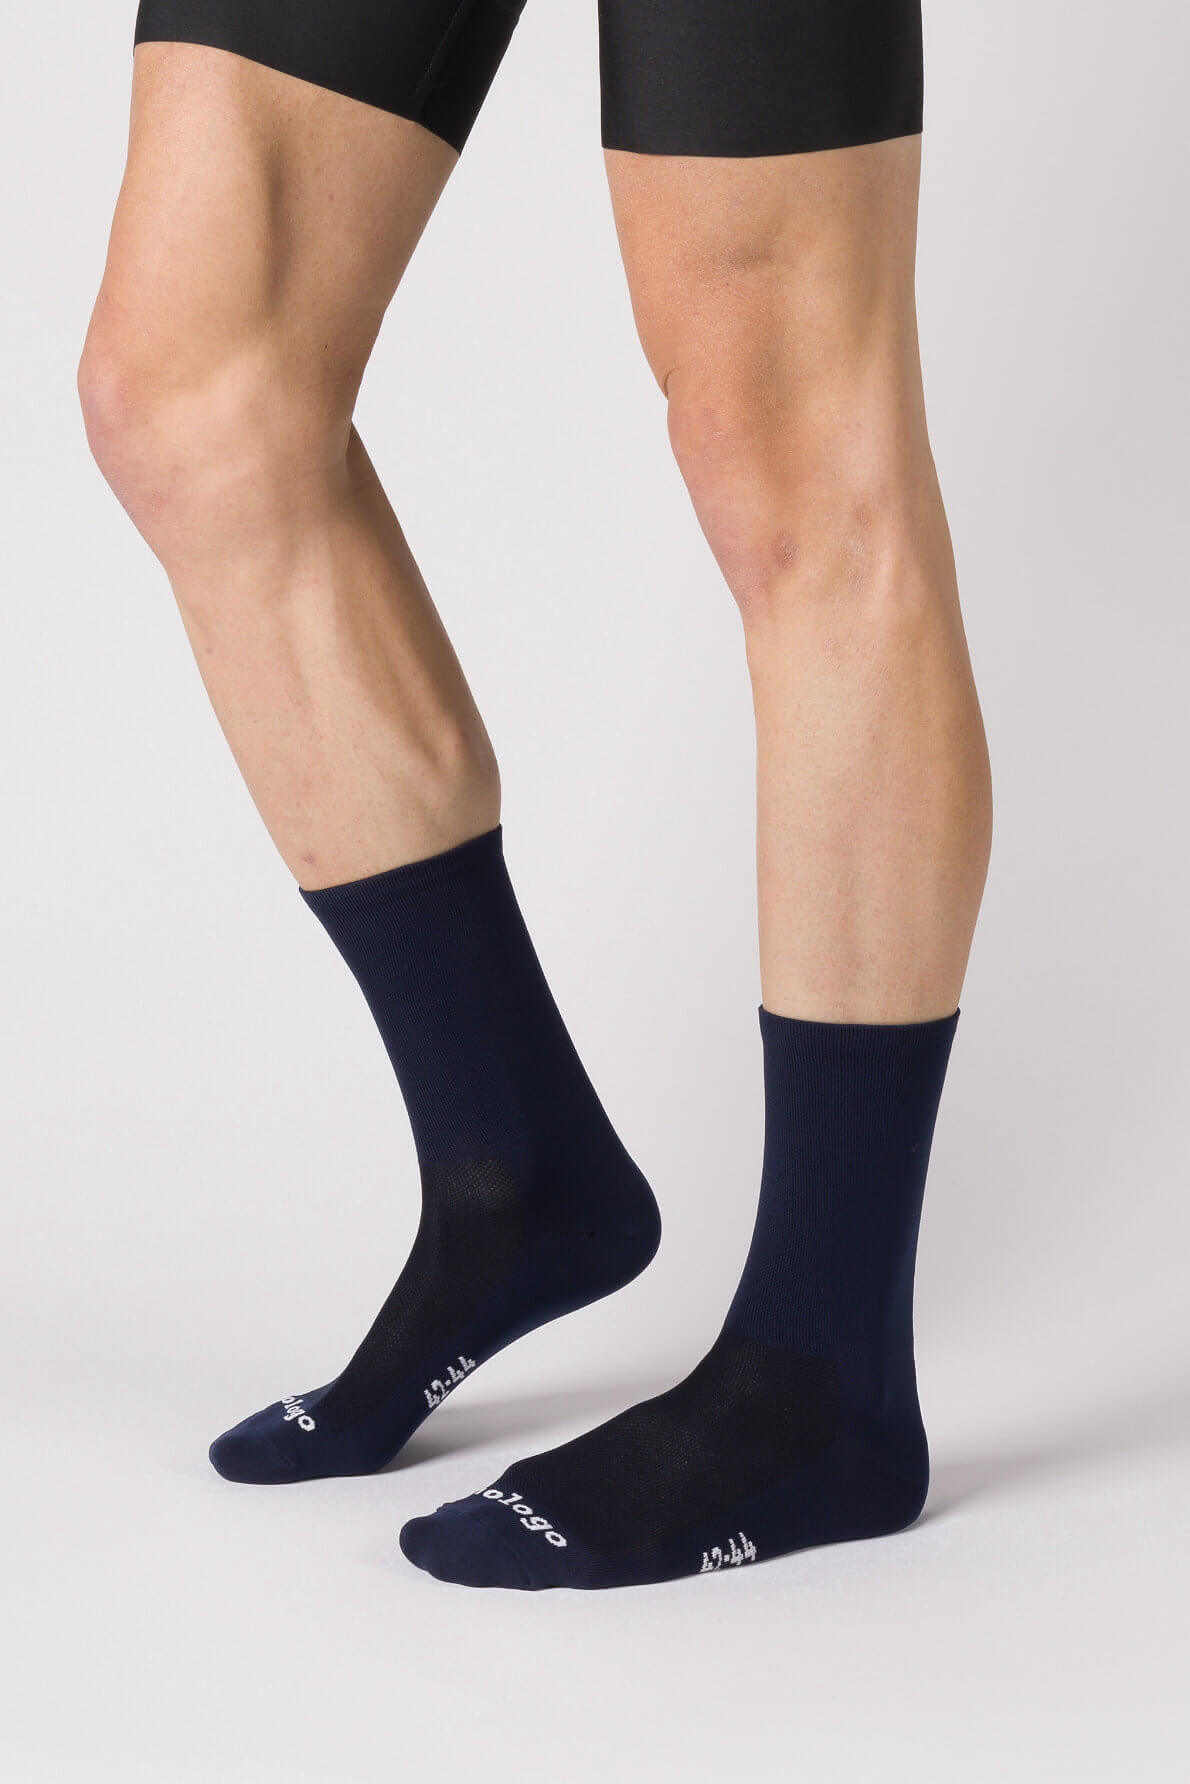 Nalini Pro Palustris Cycling Socks Choose Size Black